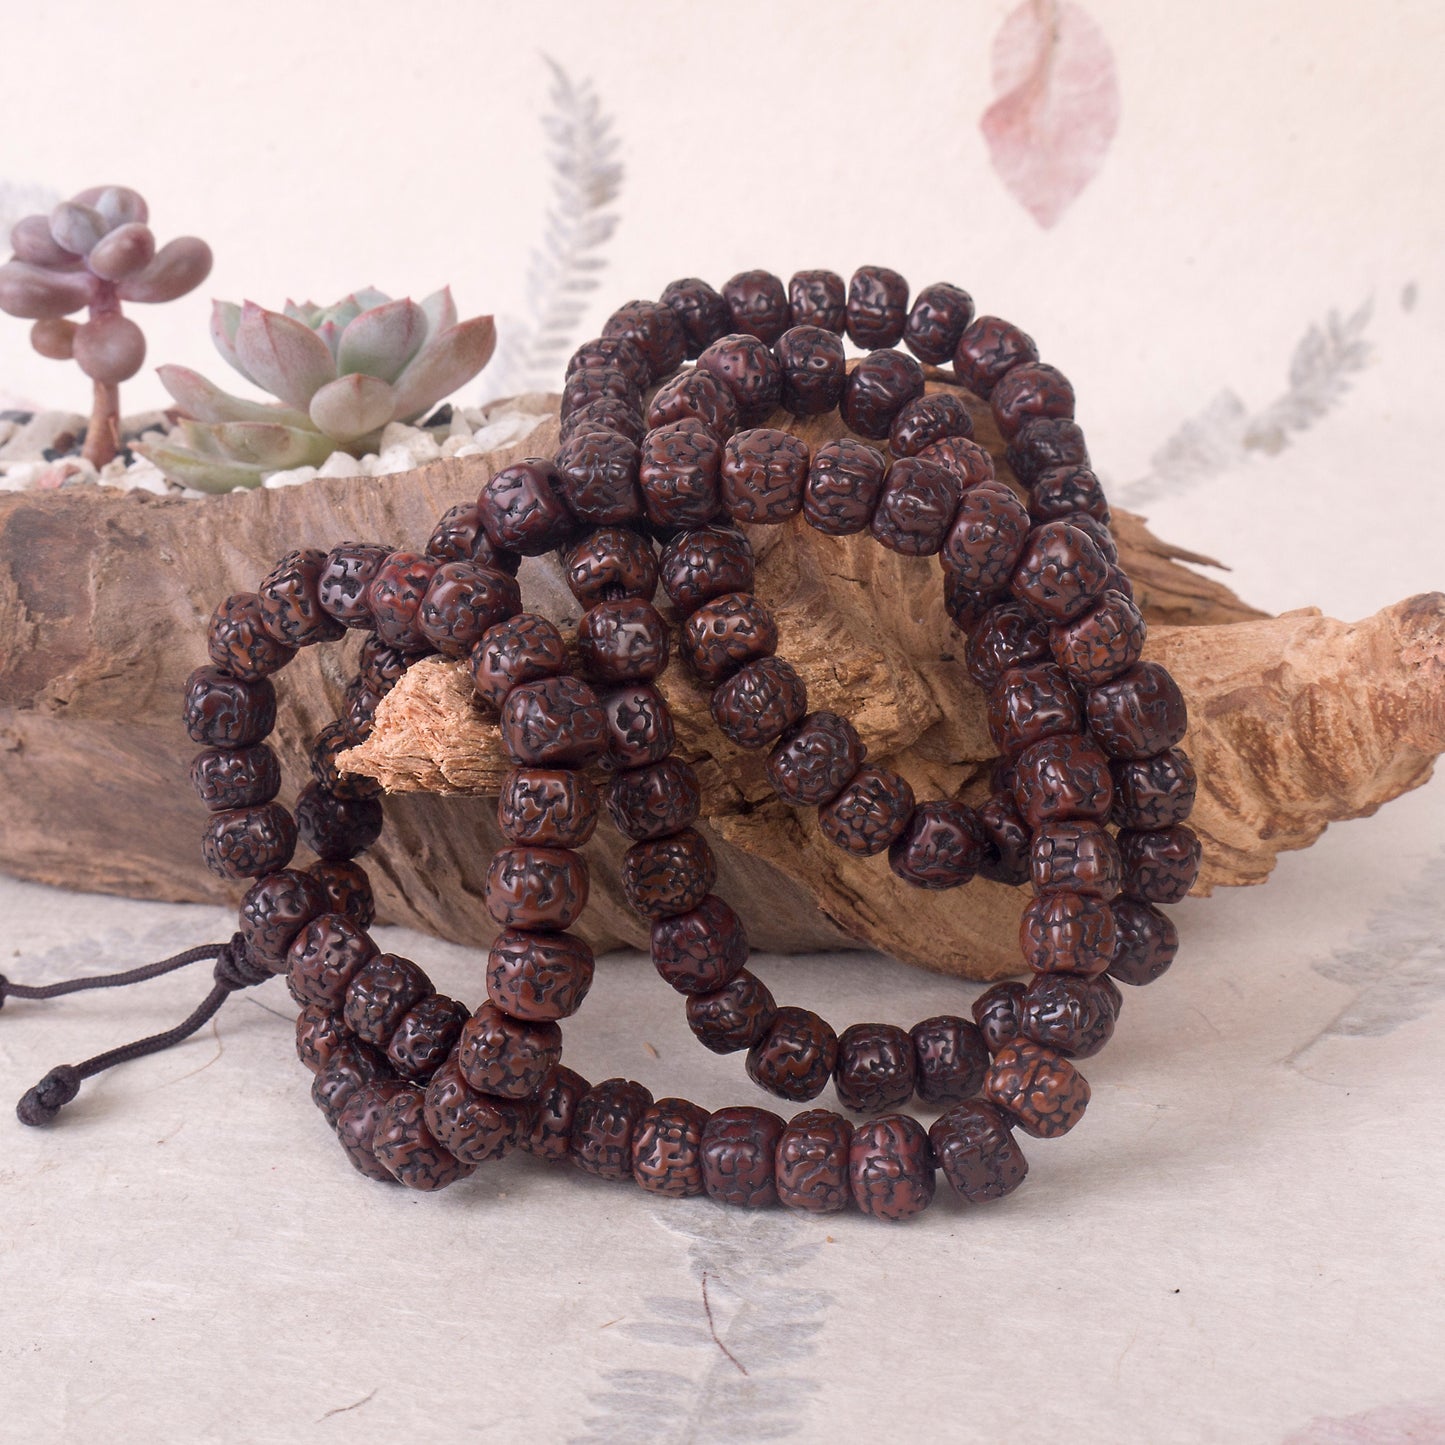 Gandhanra Handmade Antique Bodhi Beads,108 Mala Beads Necklace,Prayer Beads,Rudraksha Beads for Meditation